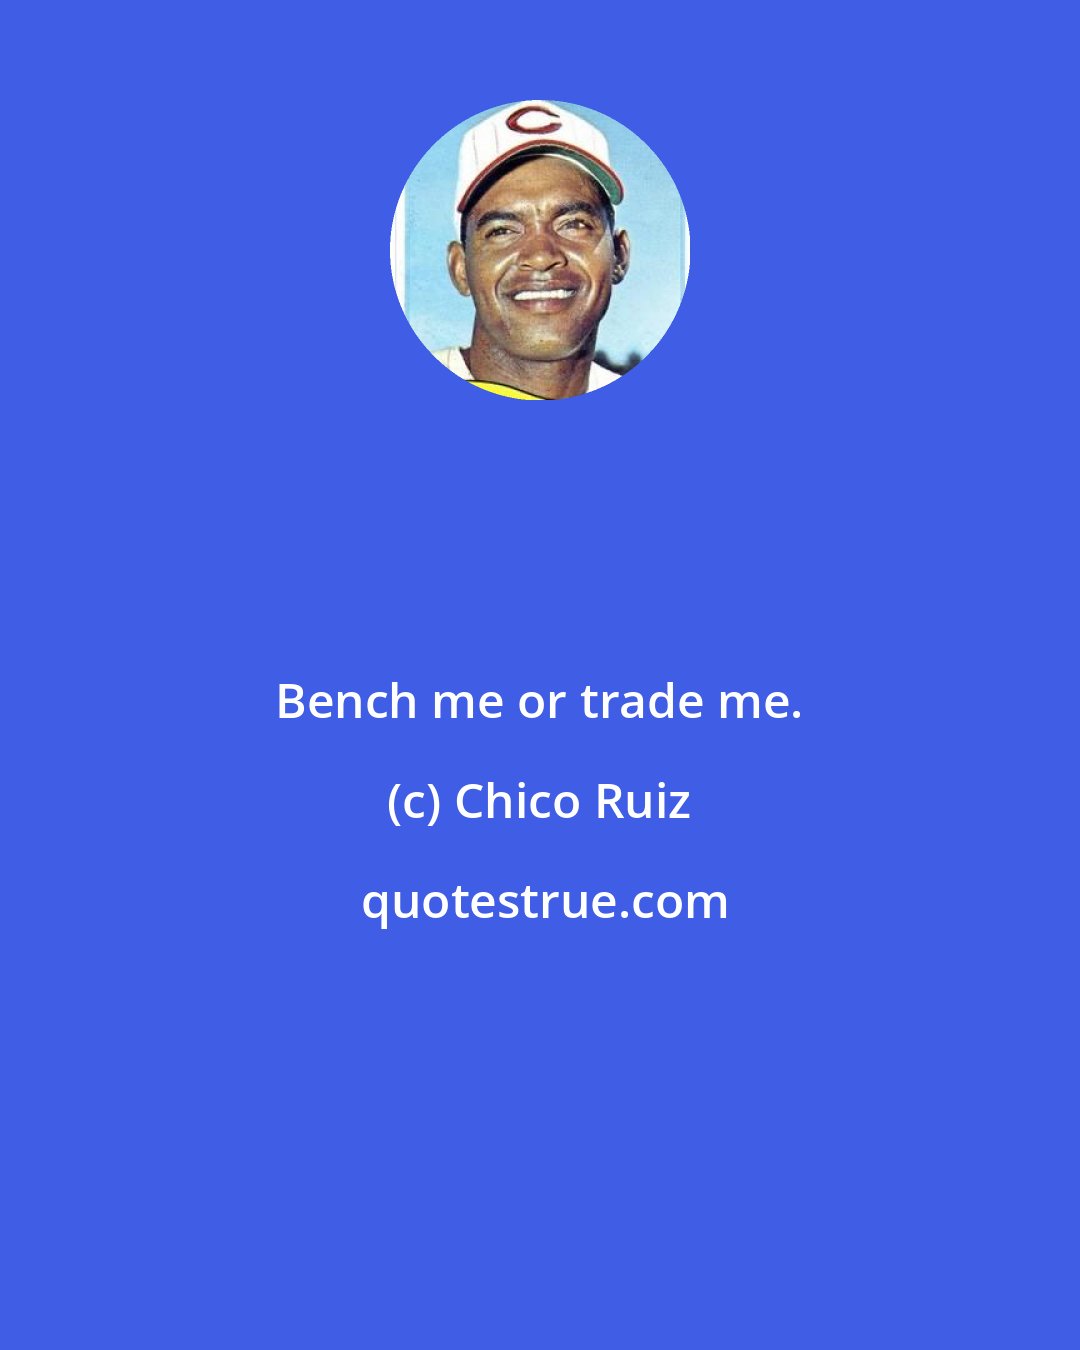 Chico Ruiz: Bench me or trade me.